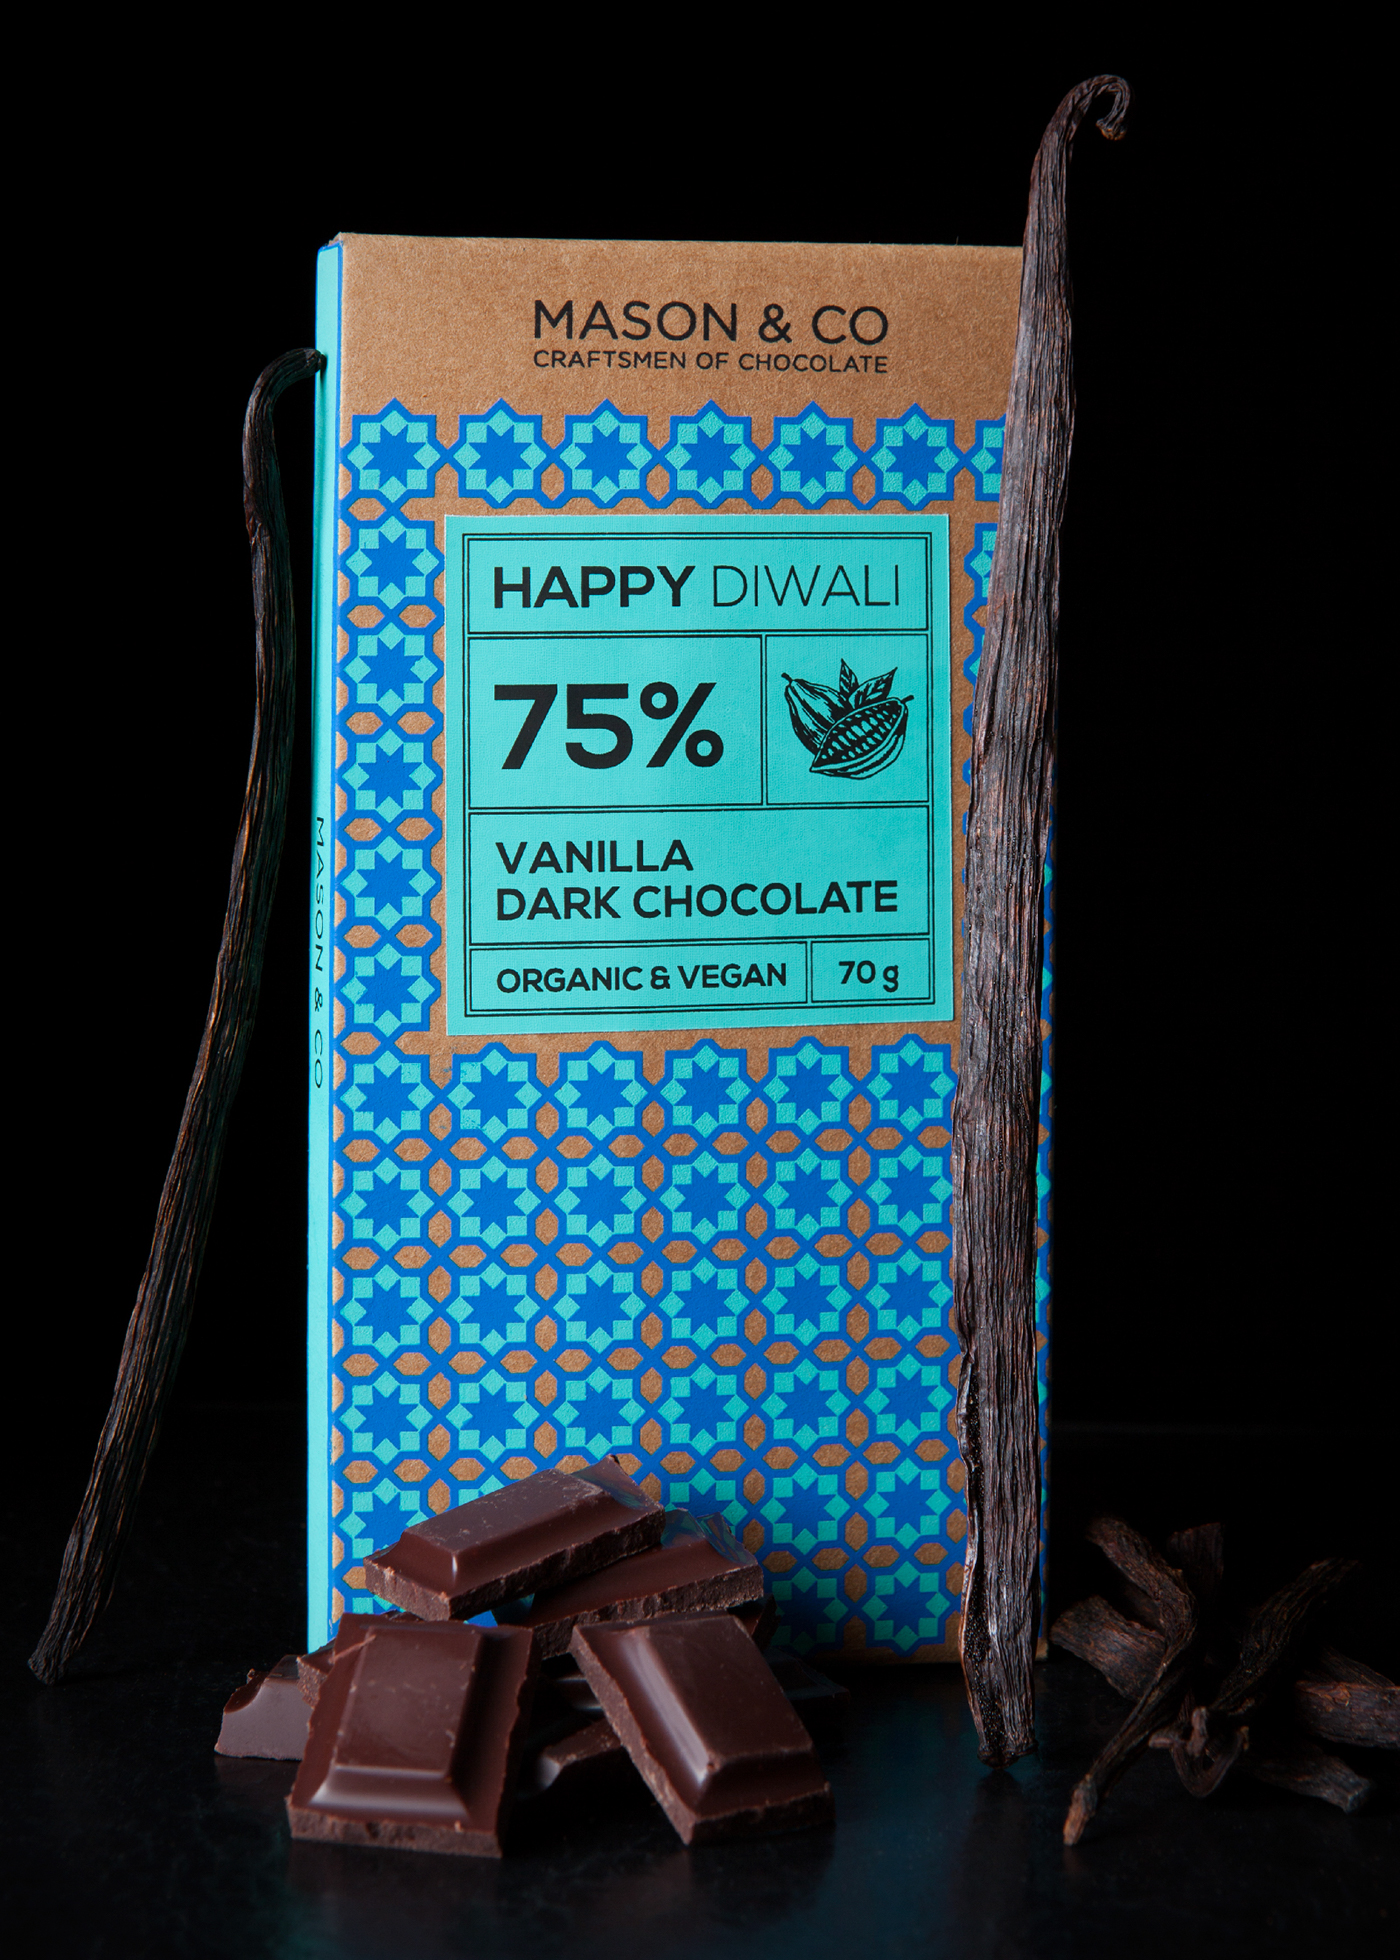 Impprintz mason&co chocolate organic festive special edition gift screenprint box Kraft India Auroville vanilla